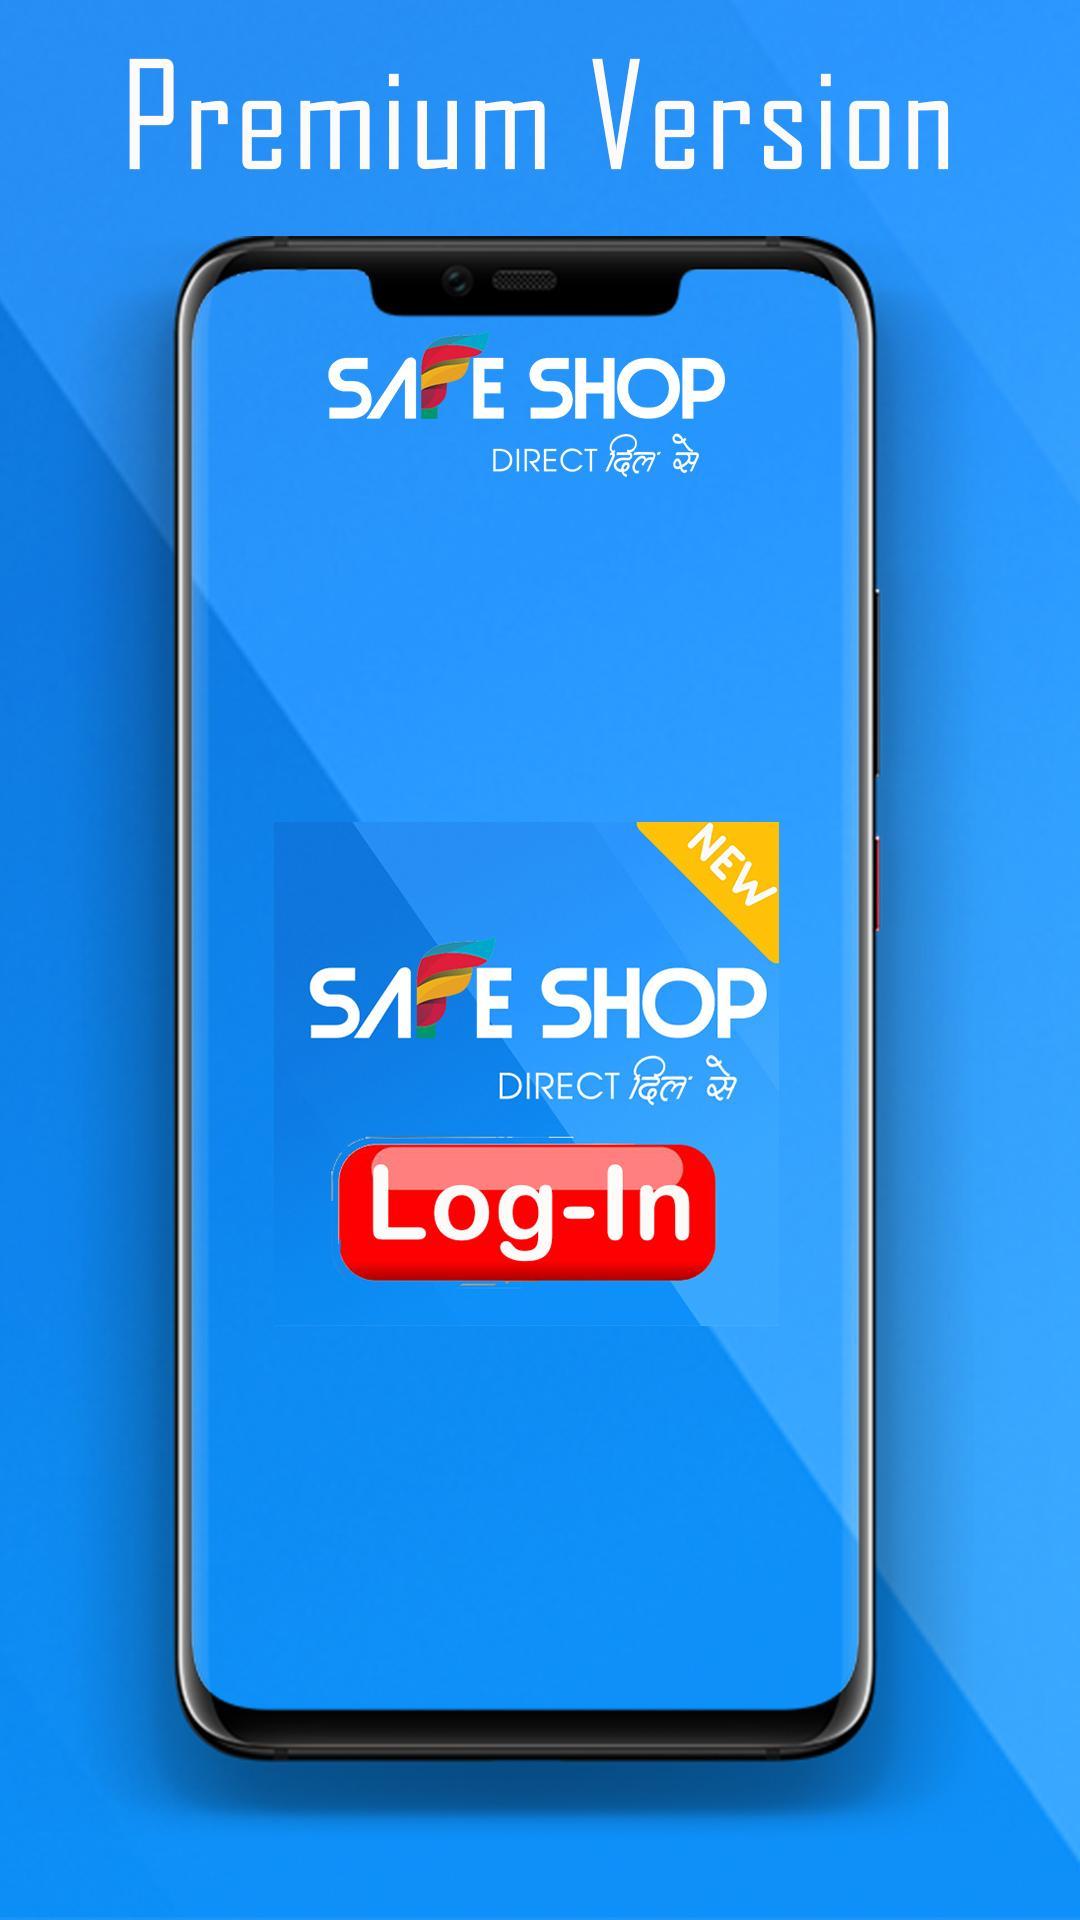 Safe Shop for Android - APK Download